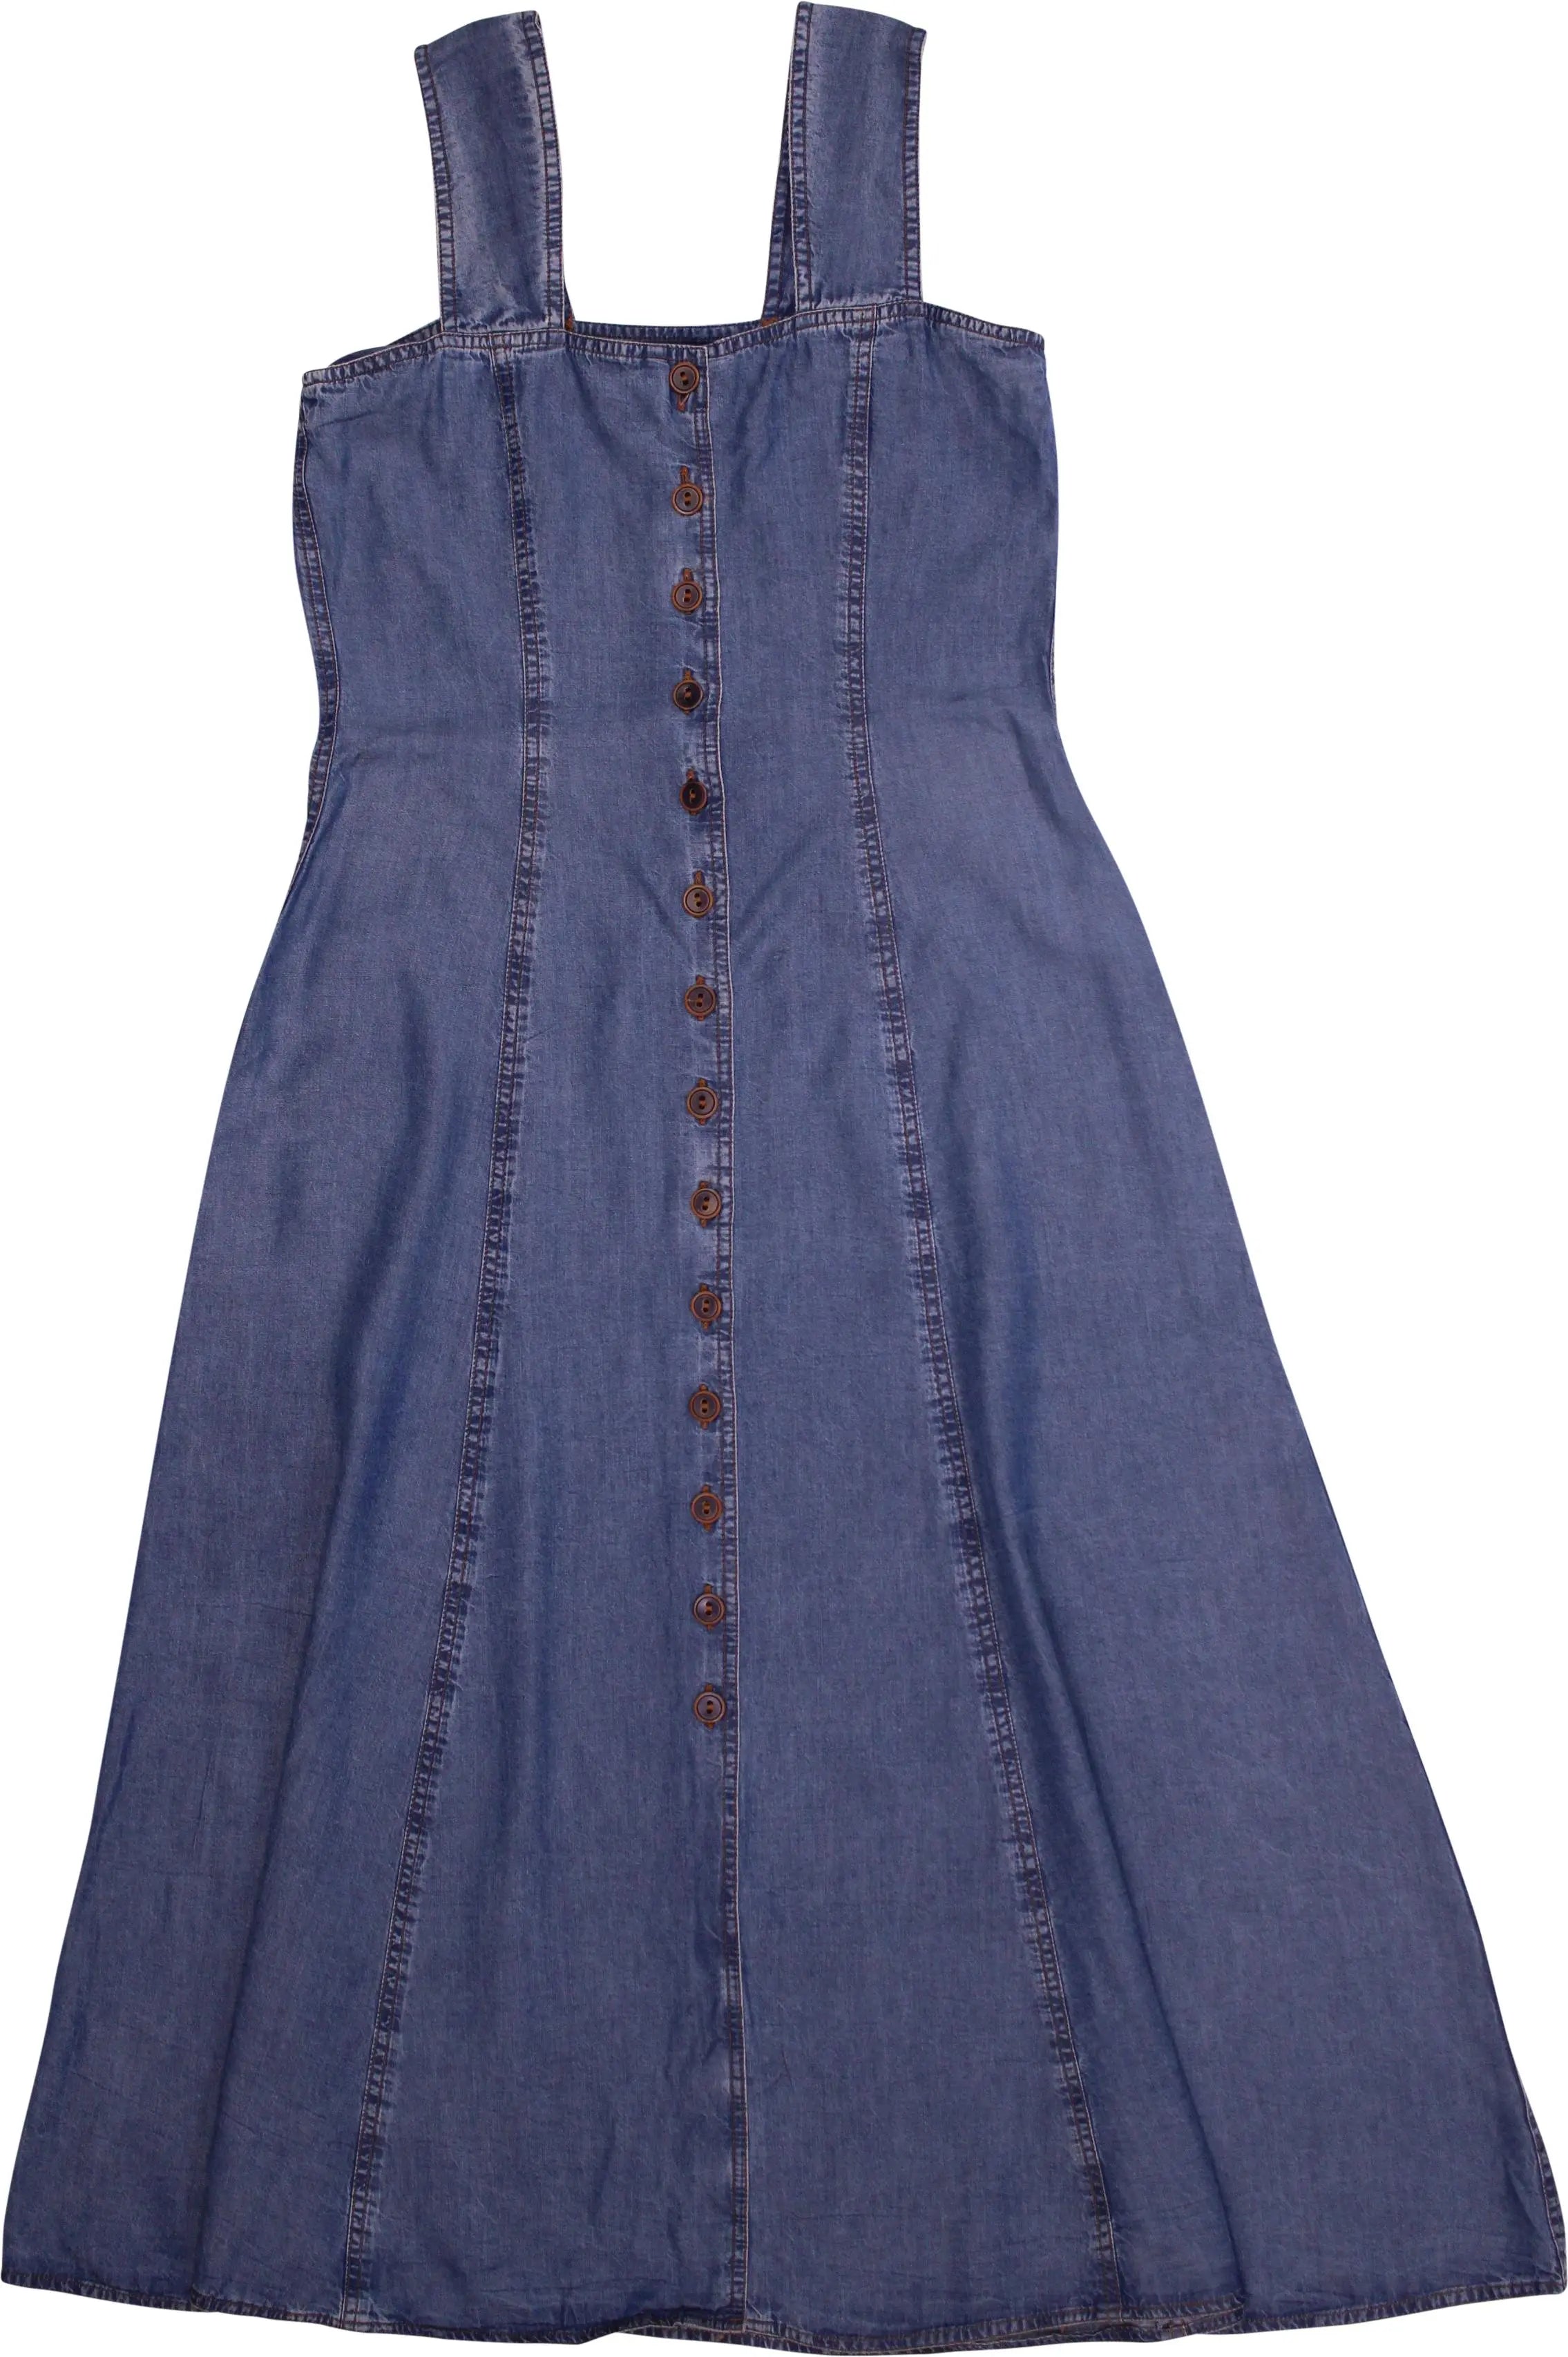 Bianca - Maxi Dress Denim- ThriftTale.com - Vintage and second handclothing